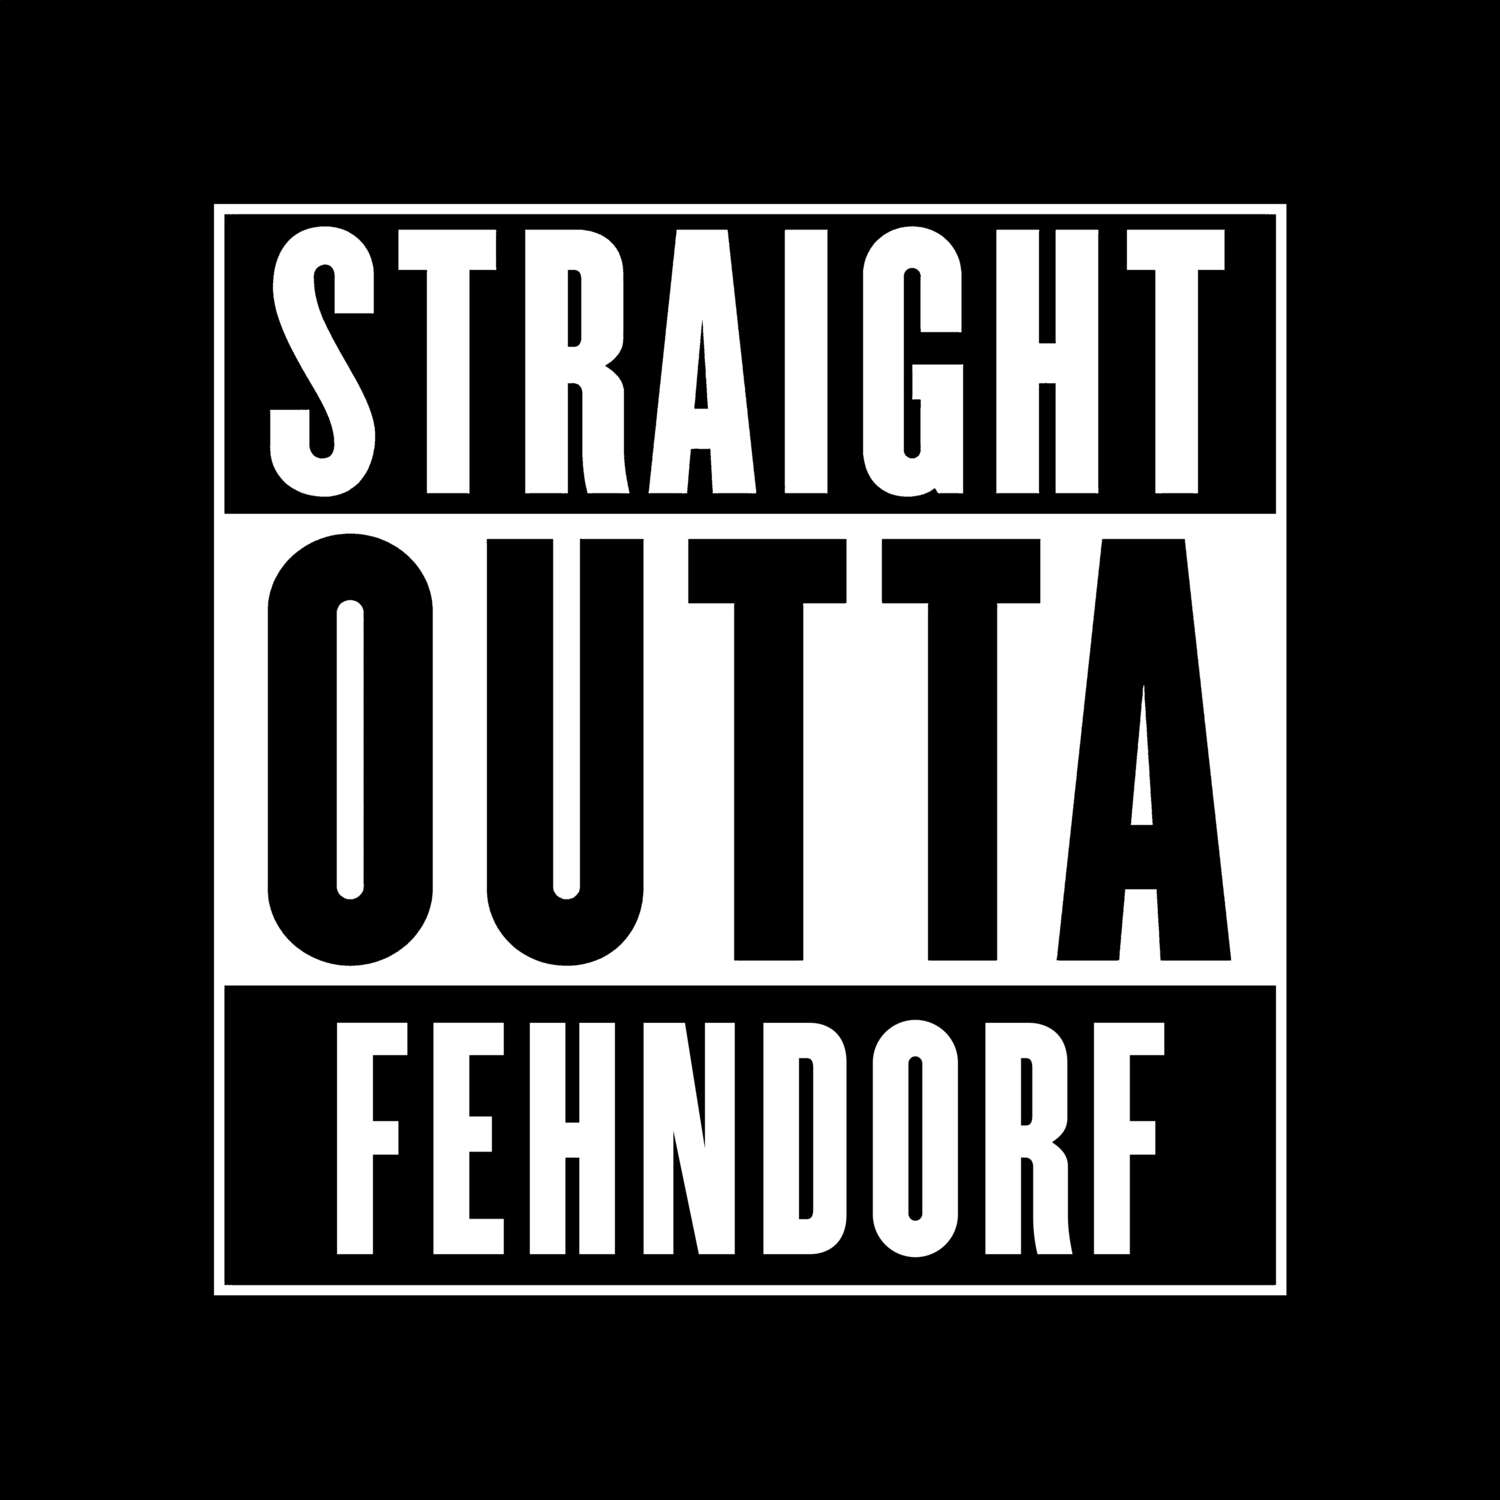 Fehndorf T-Shirt »Straight Outta«